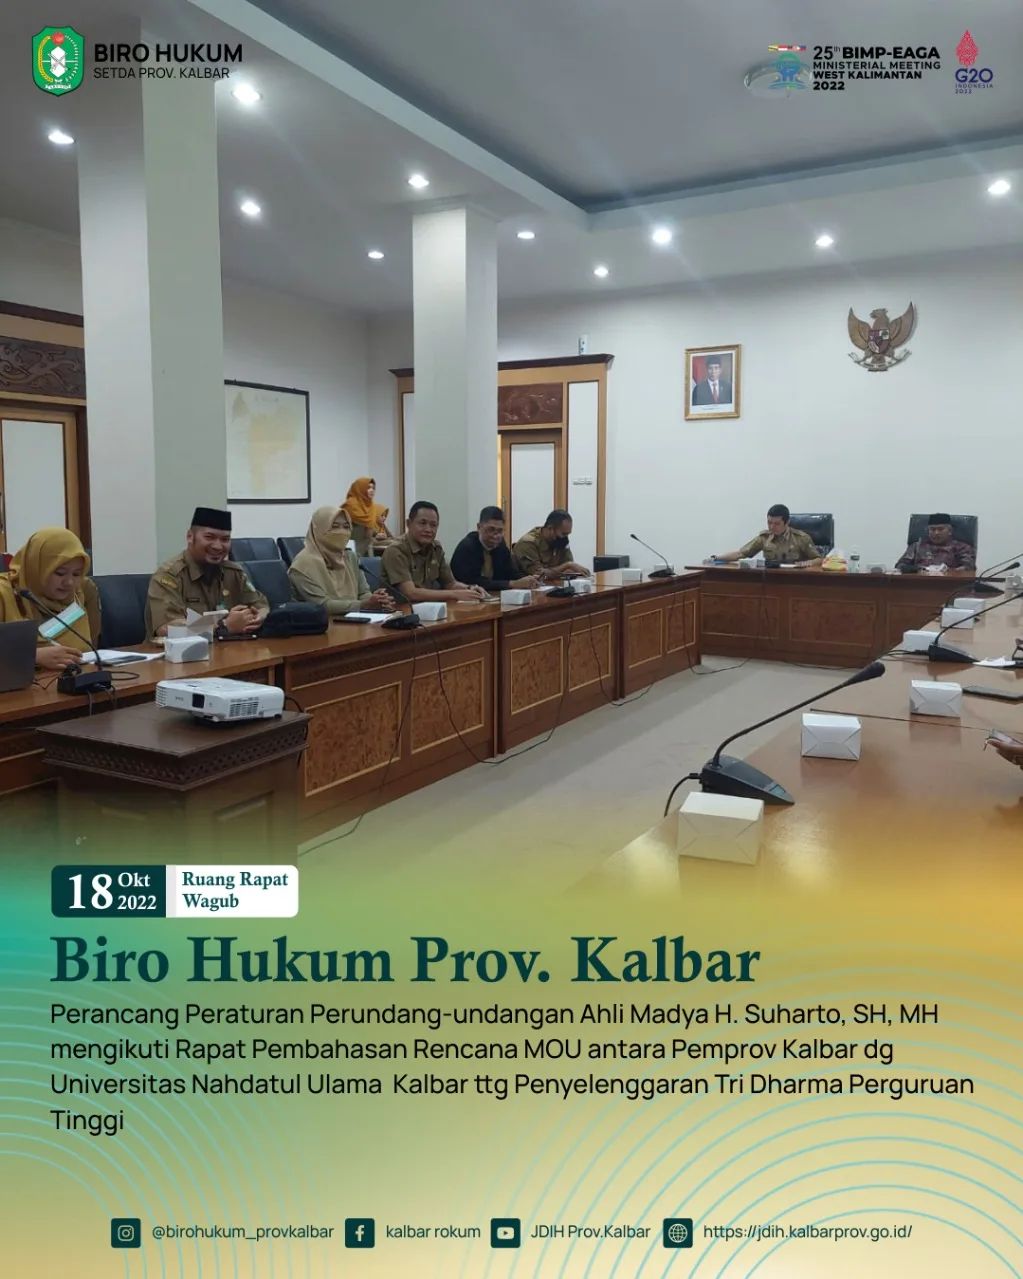 Rapat Pembahasan Rencana MOU antara Pemprov Kalbar dengan Universitas Nahdatul Ulama